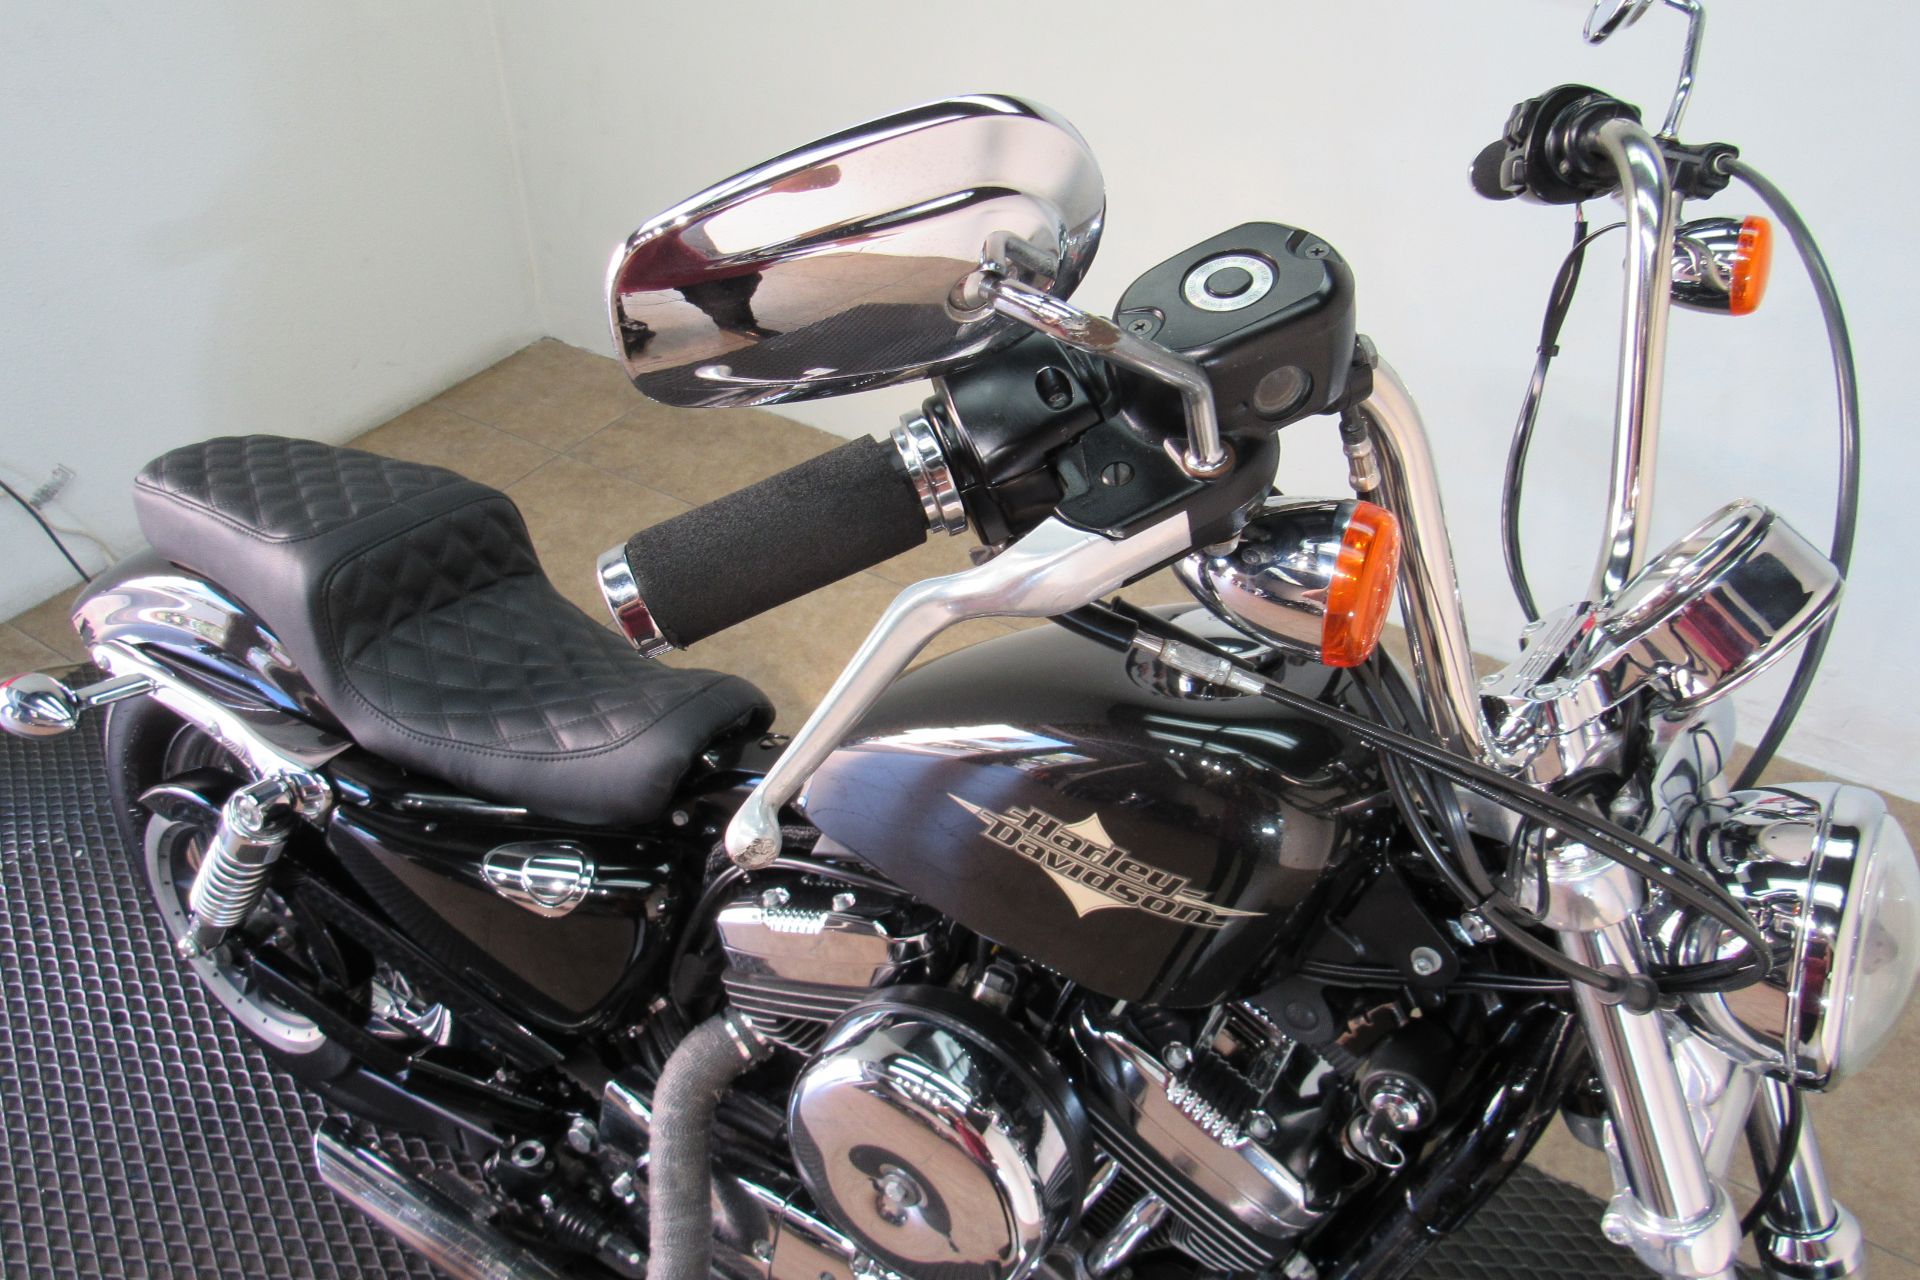 2015 Harley-Davidson Seventy-Two® in Temecula, California - Photo 24